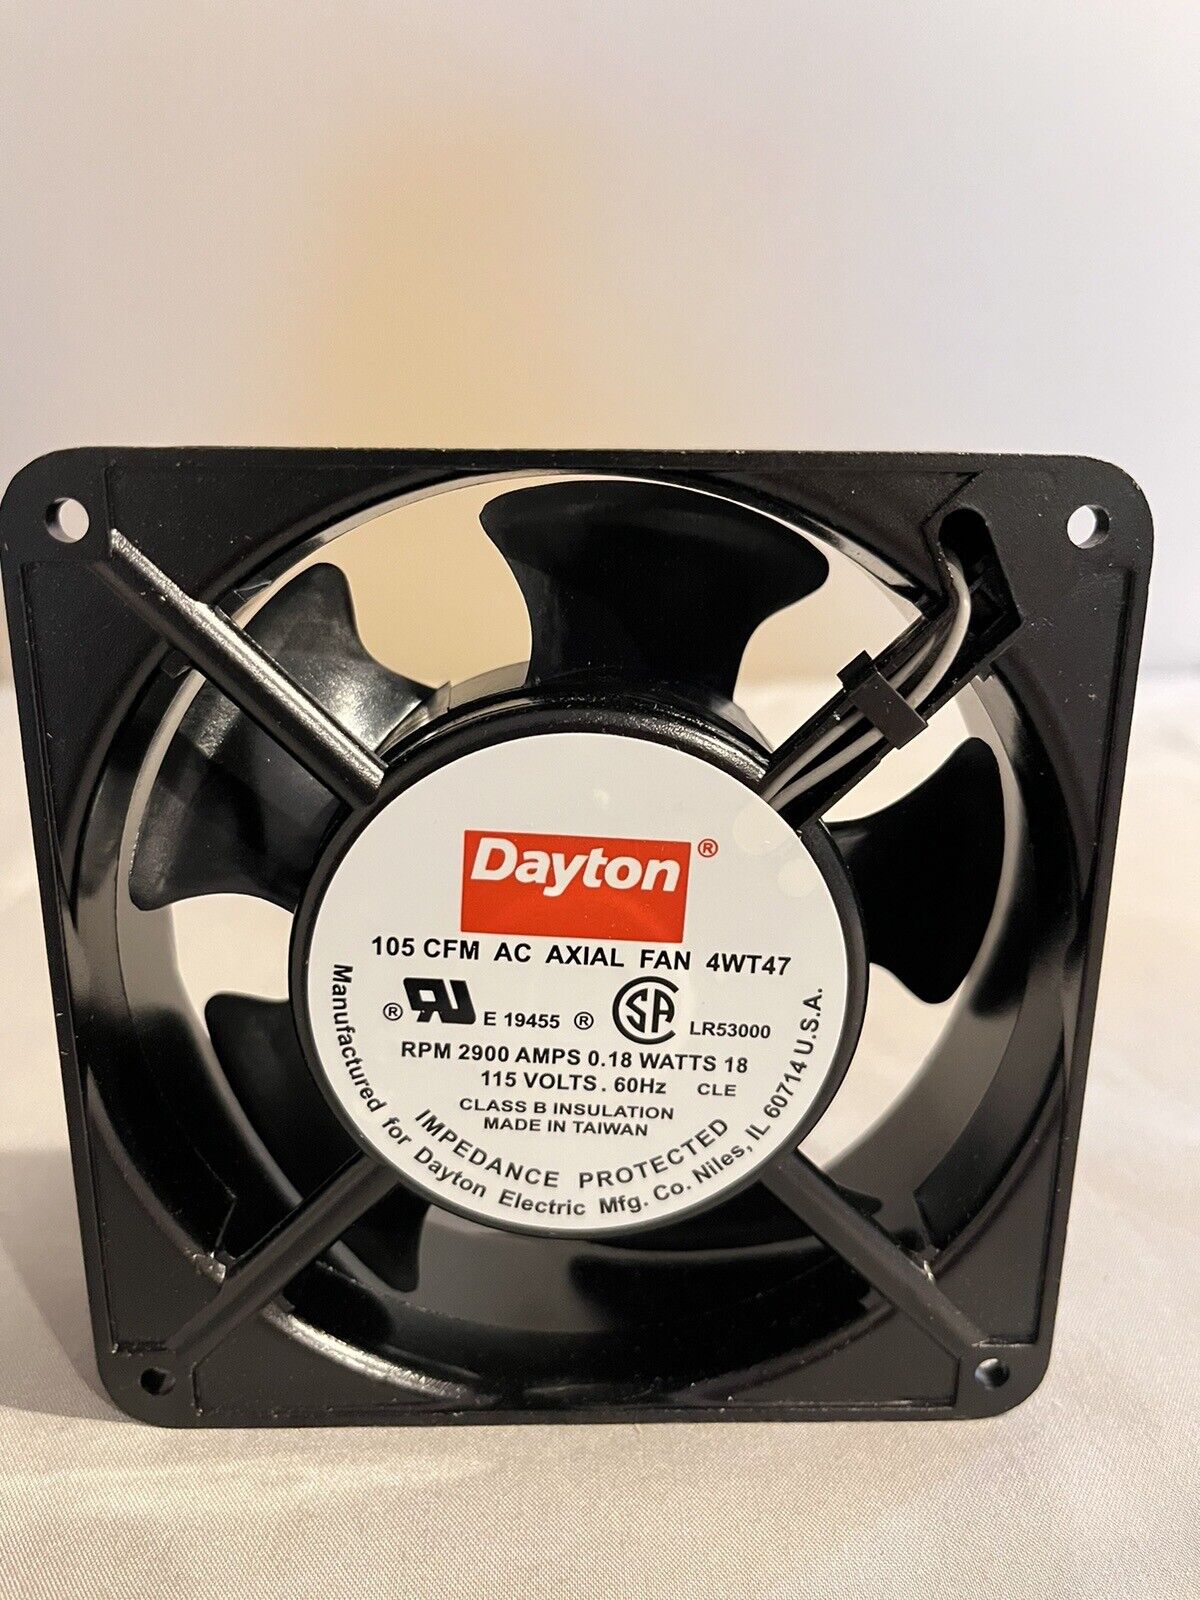 New original Dayton 4WT47 115V.60Hz welding cooling fan